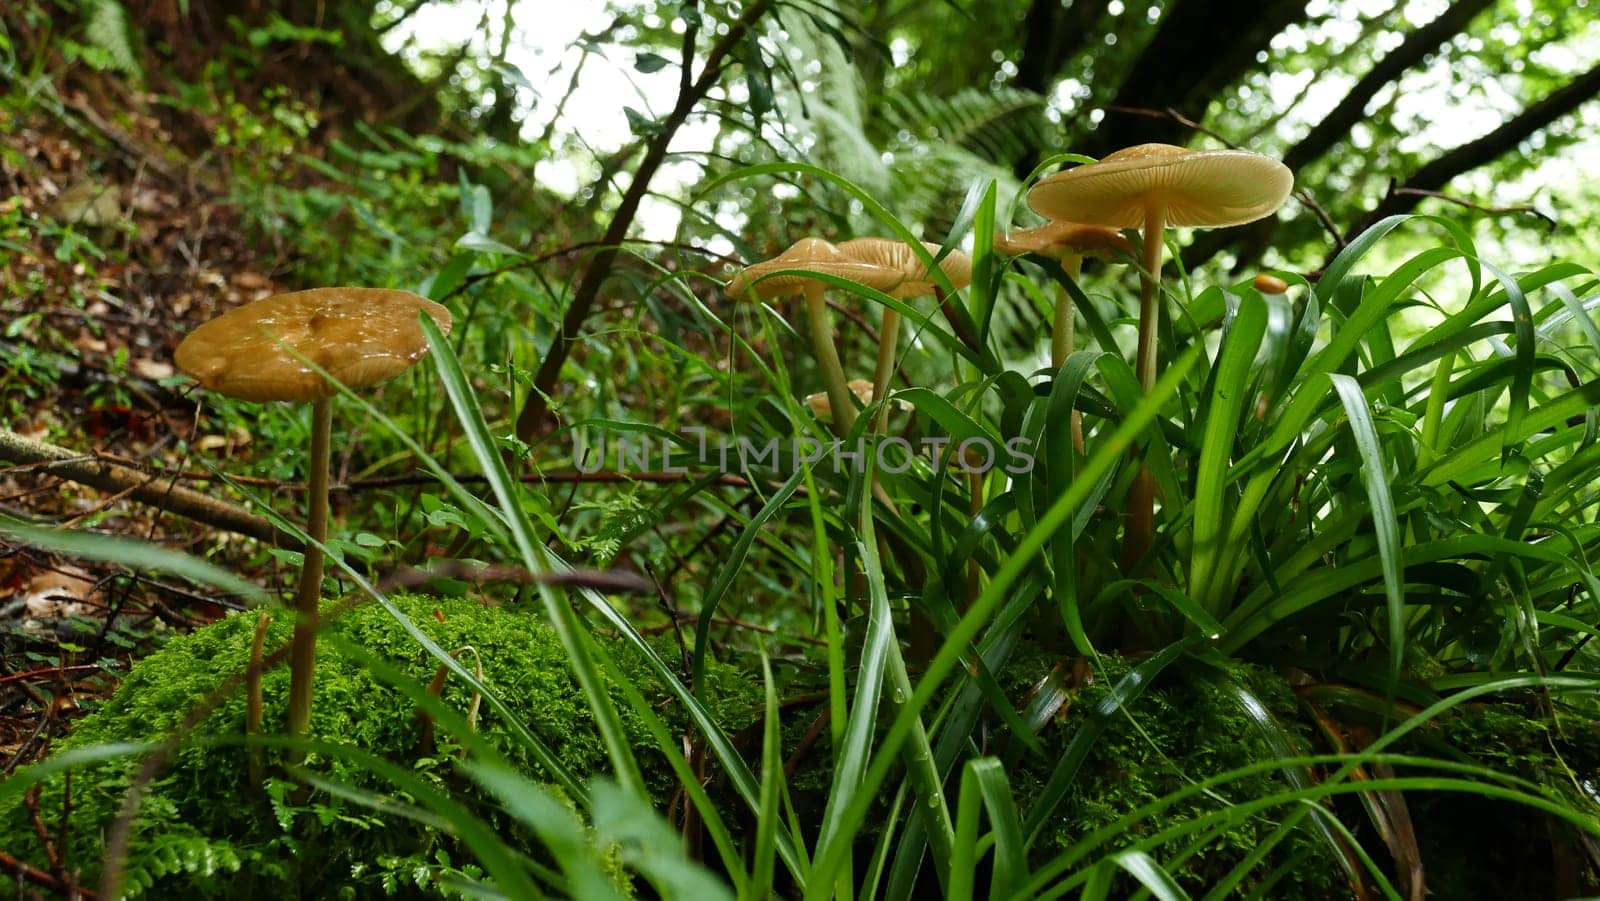 Group of mushrooms among the forest vegetation